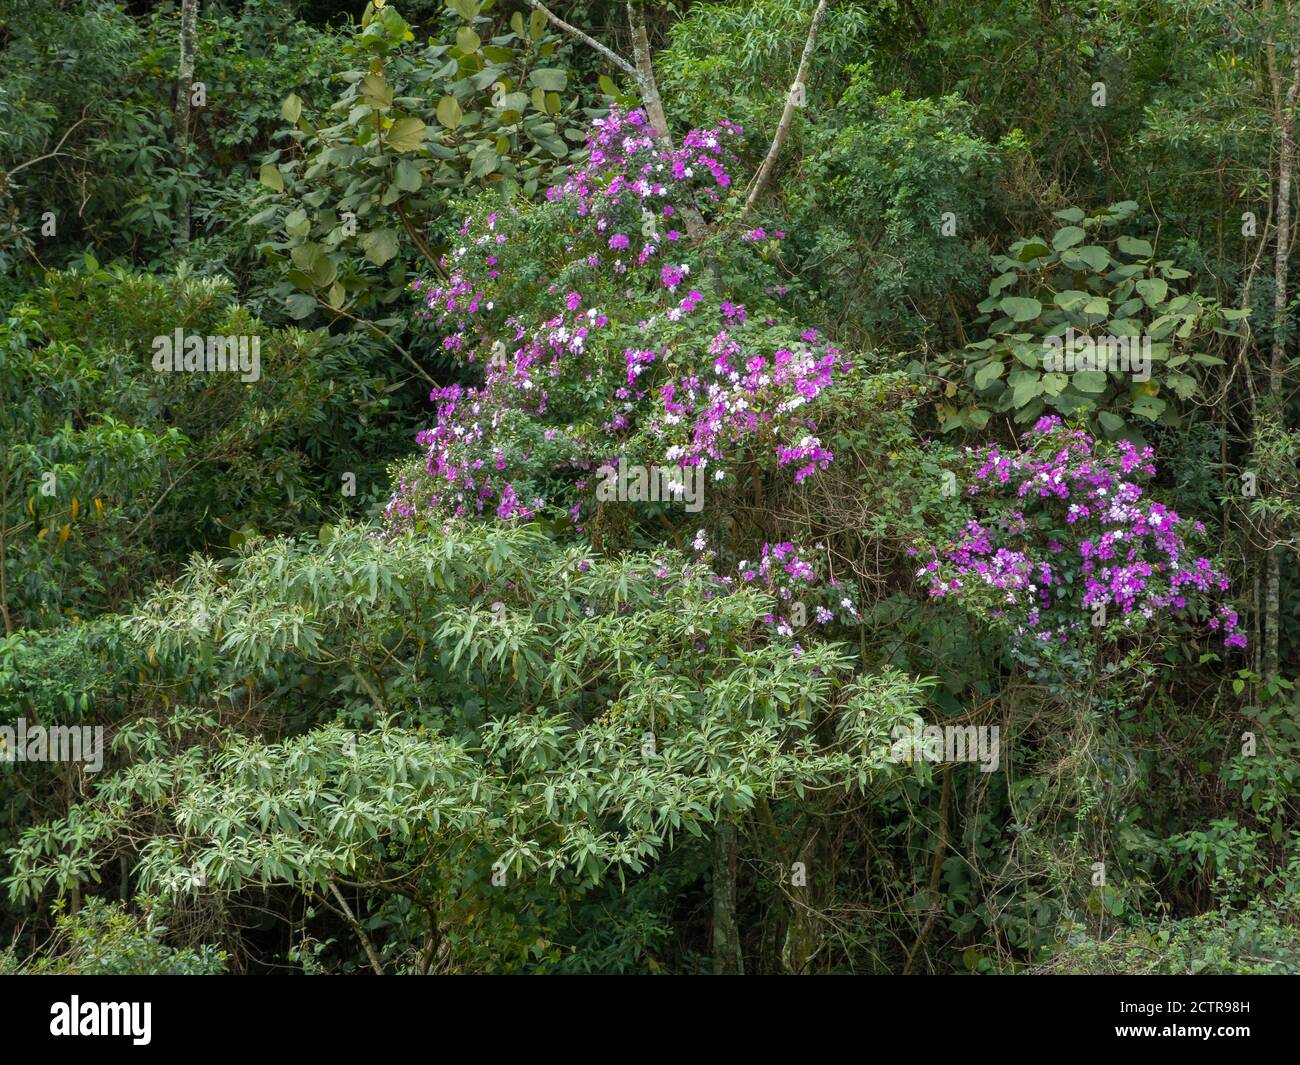 Tibouchina granulosa seasonal flowers tree contrast in green forest Stock Photo